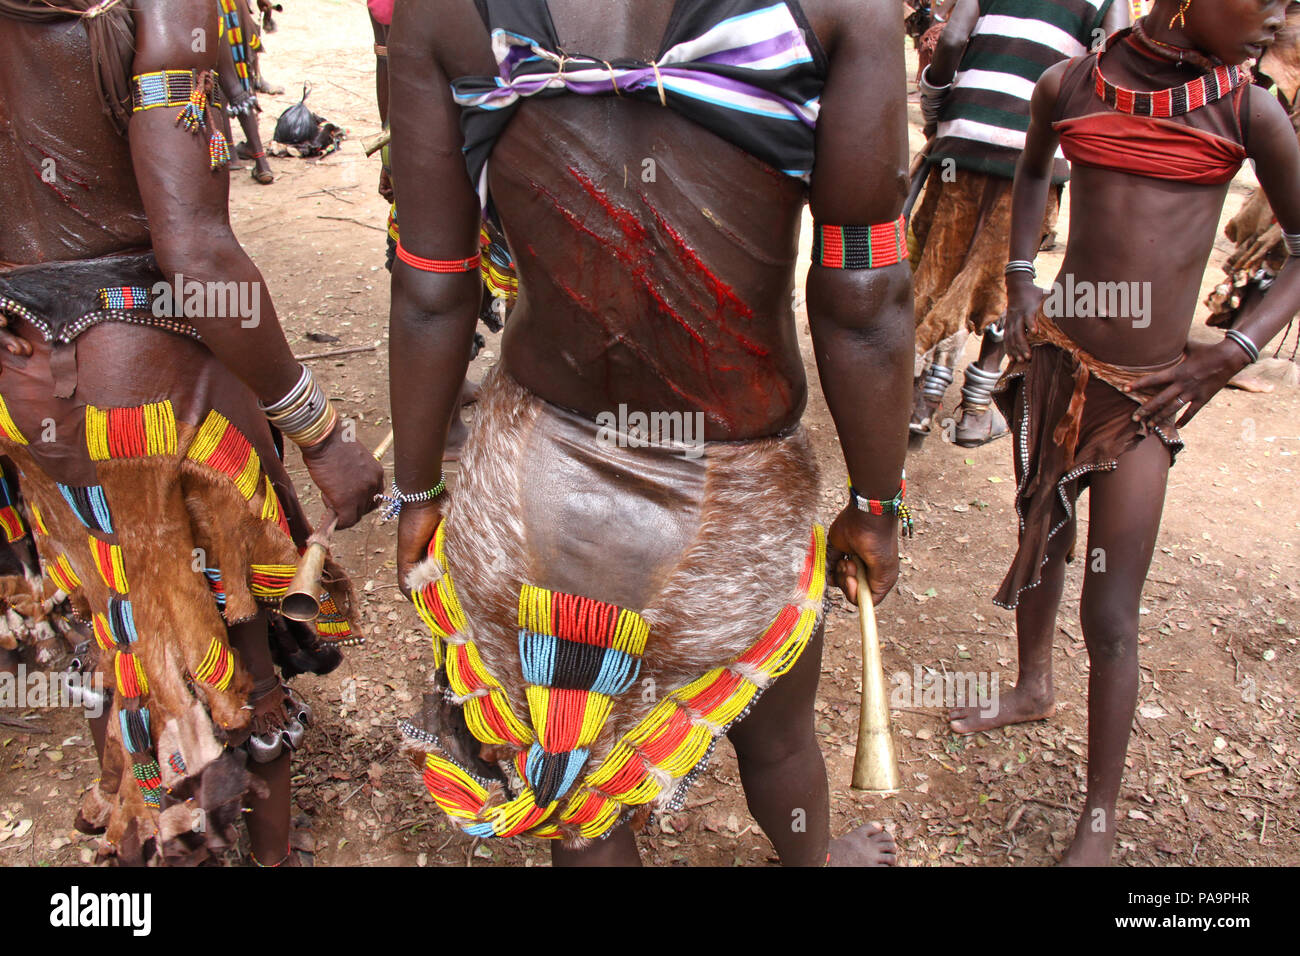 Ferite aperte da colpo di frusta durante Bull Jumping cerimonia (Ukuli rituale) da Hamer Hamar tribù, Etiopia Foto Stock